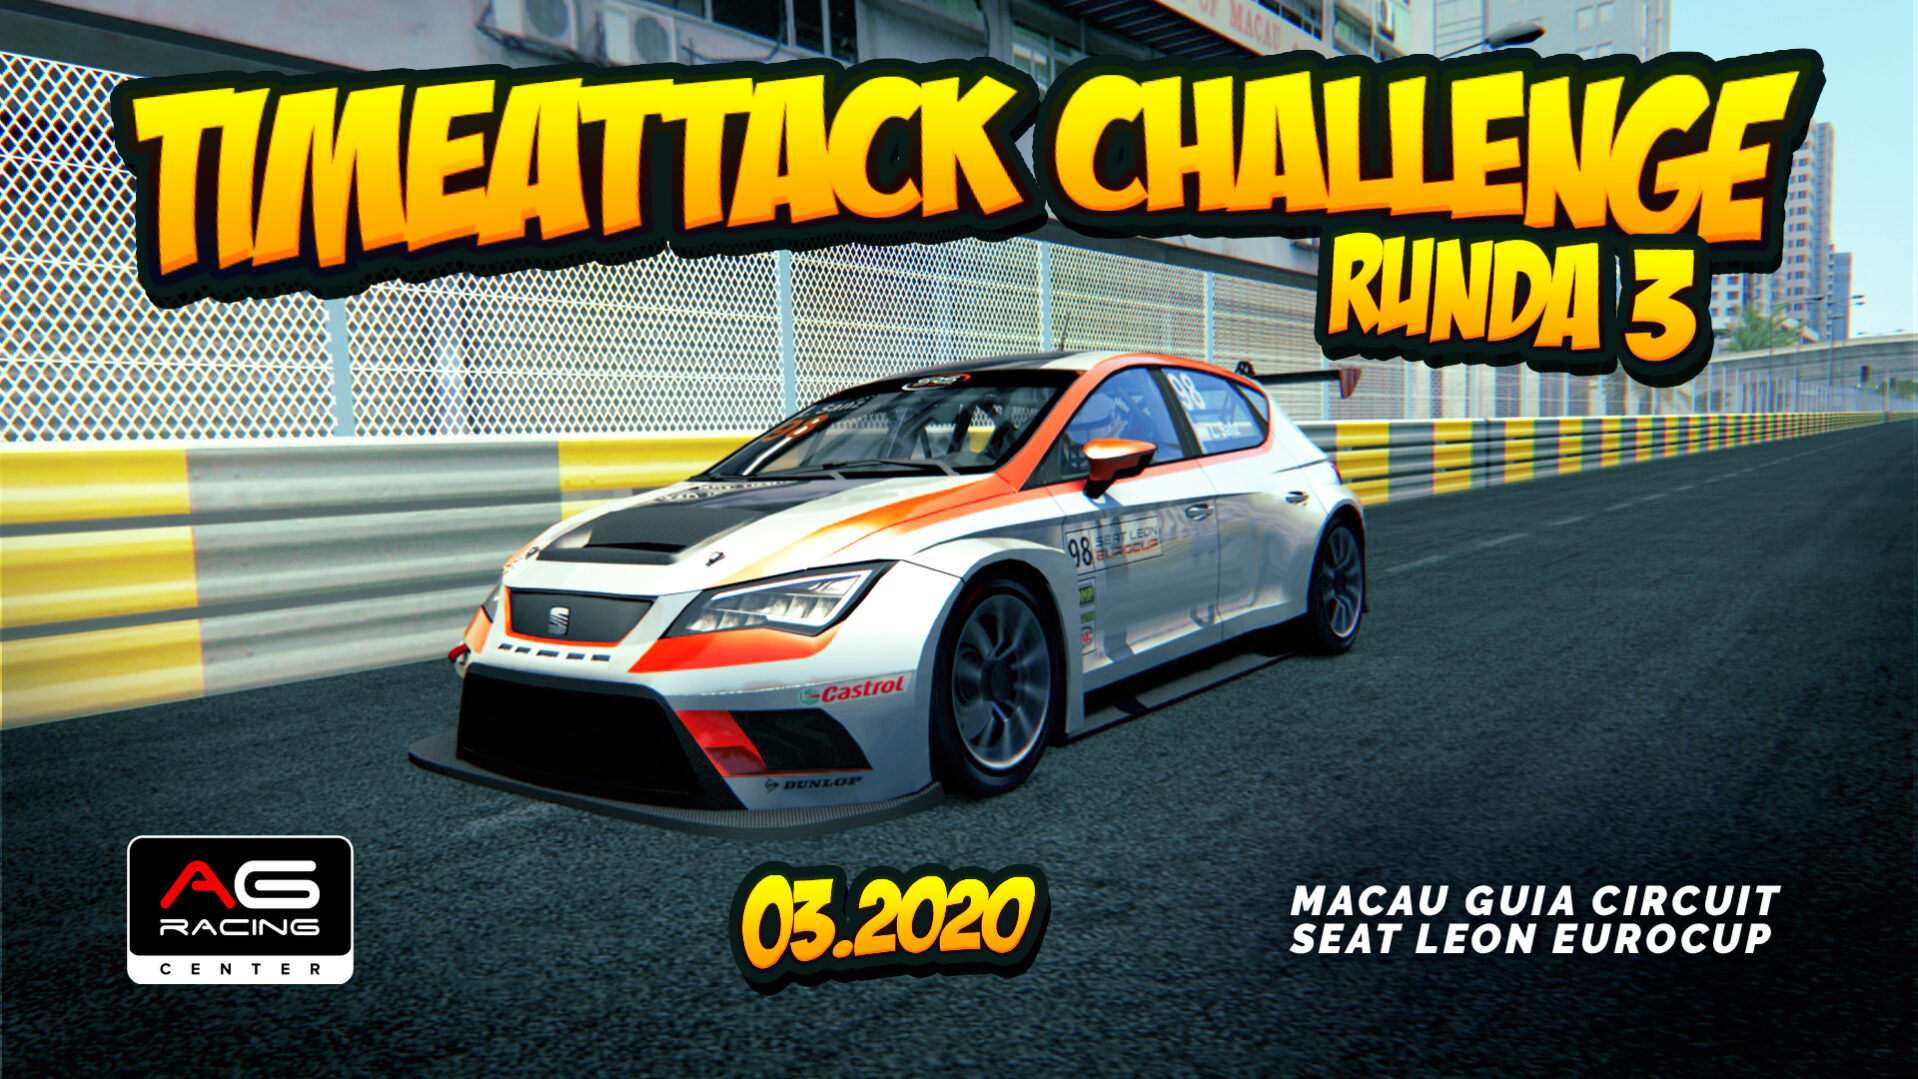 TimeAttack Challenge 2020 Runda 3